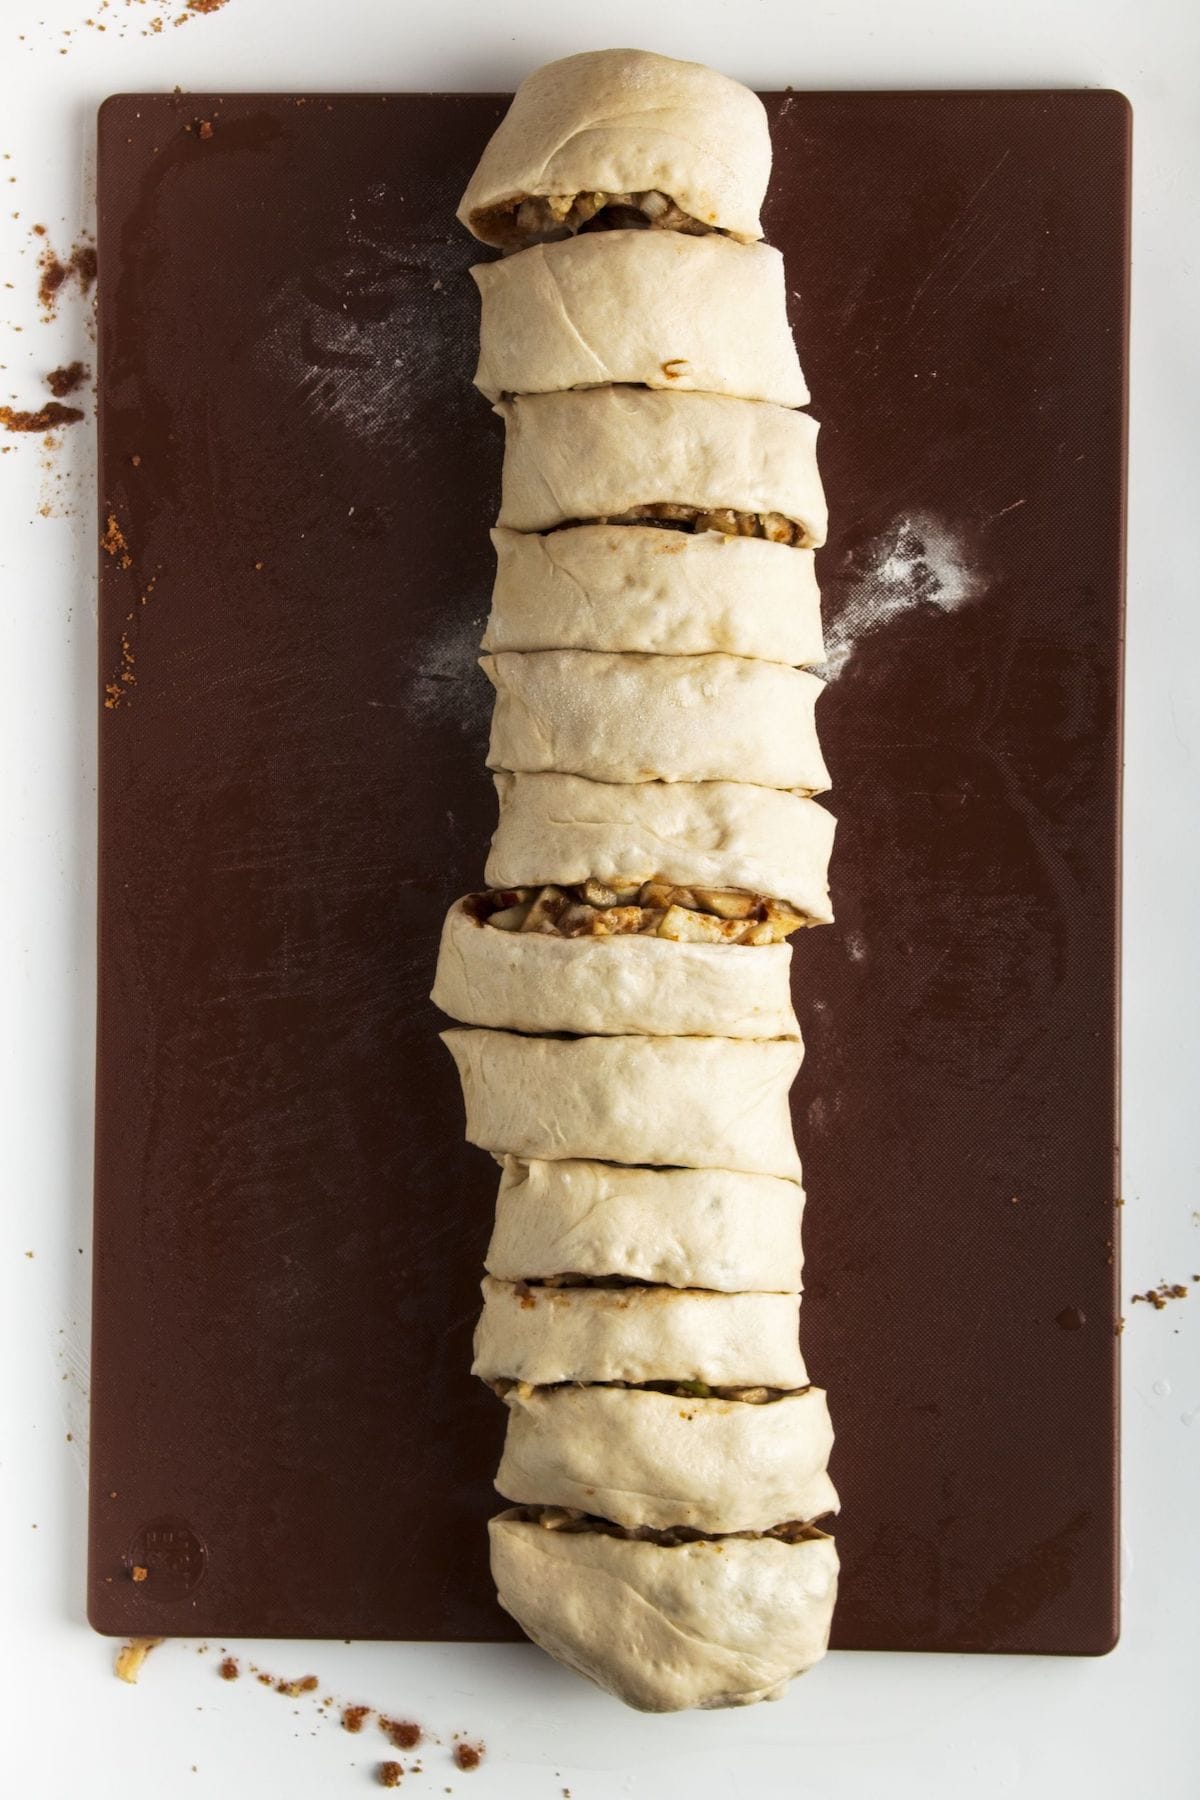 Vegan Apple Cinnamon Rolls prior to baking